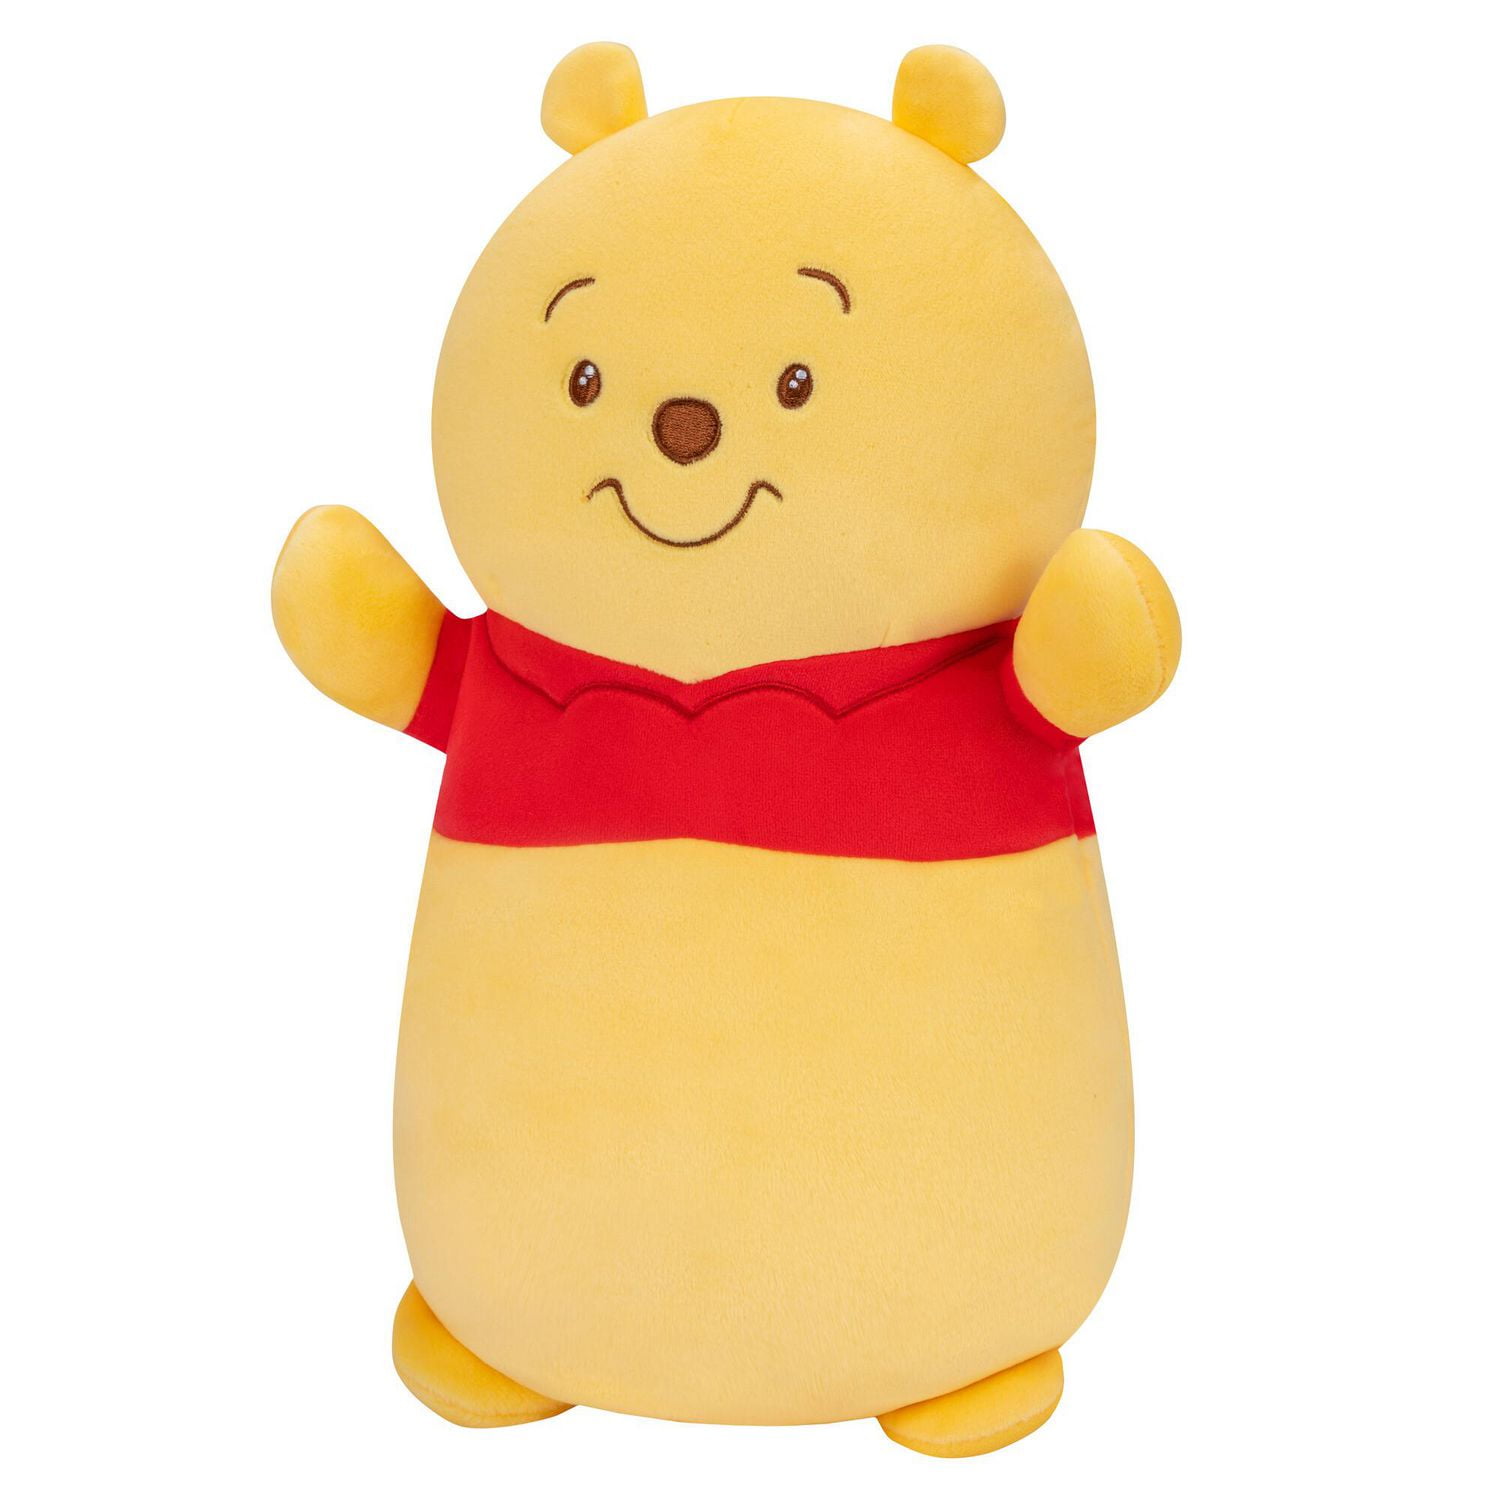 The cutest Winnie the Pooh Pjs from Costco! #costcofinds #winniethepoo